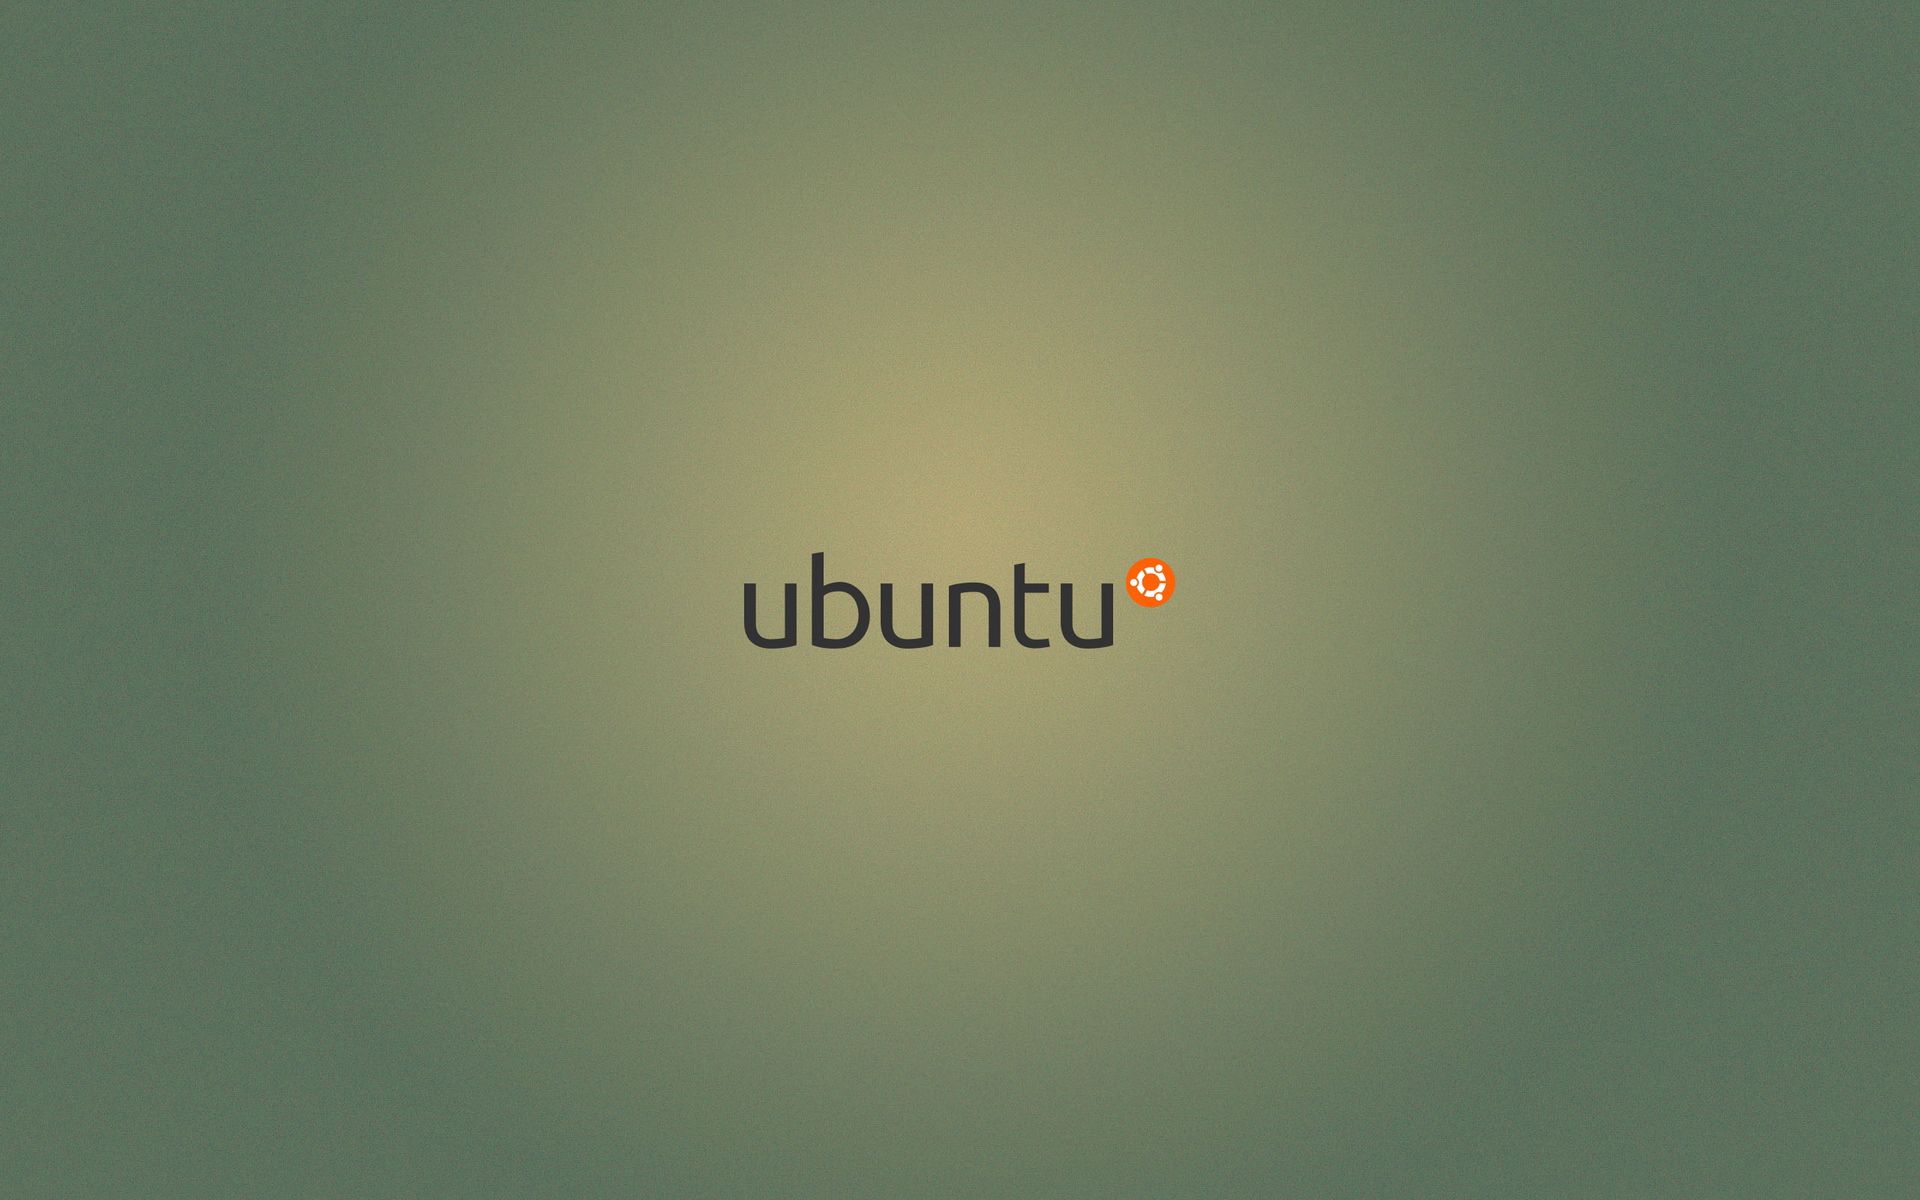 HD wallpaper, Wallpaper, Logo, Ubuntu